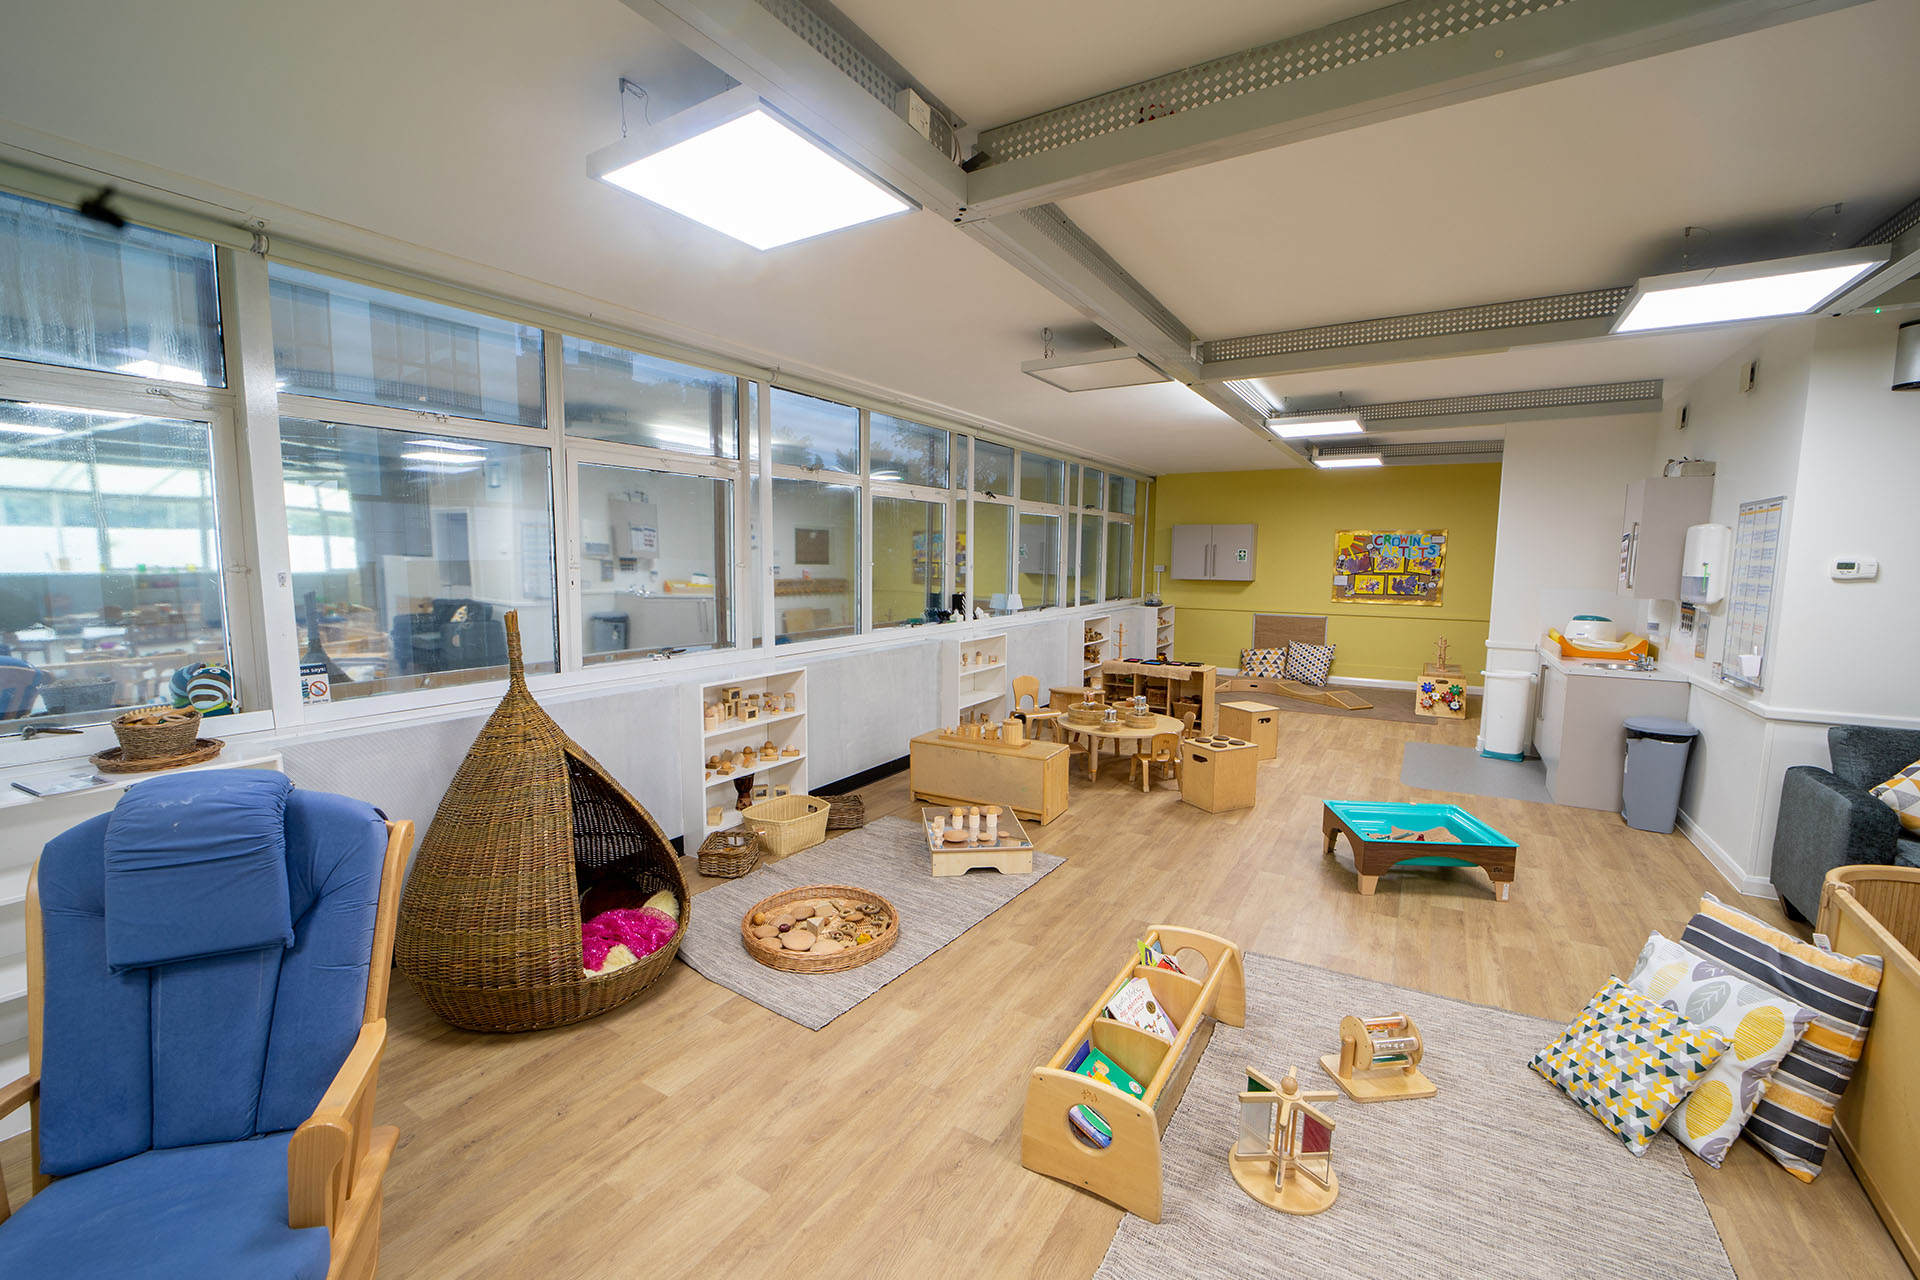 Finchley Central Day Nursery and Preschool